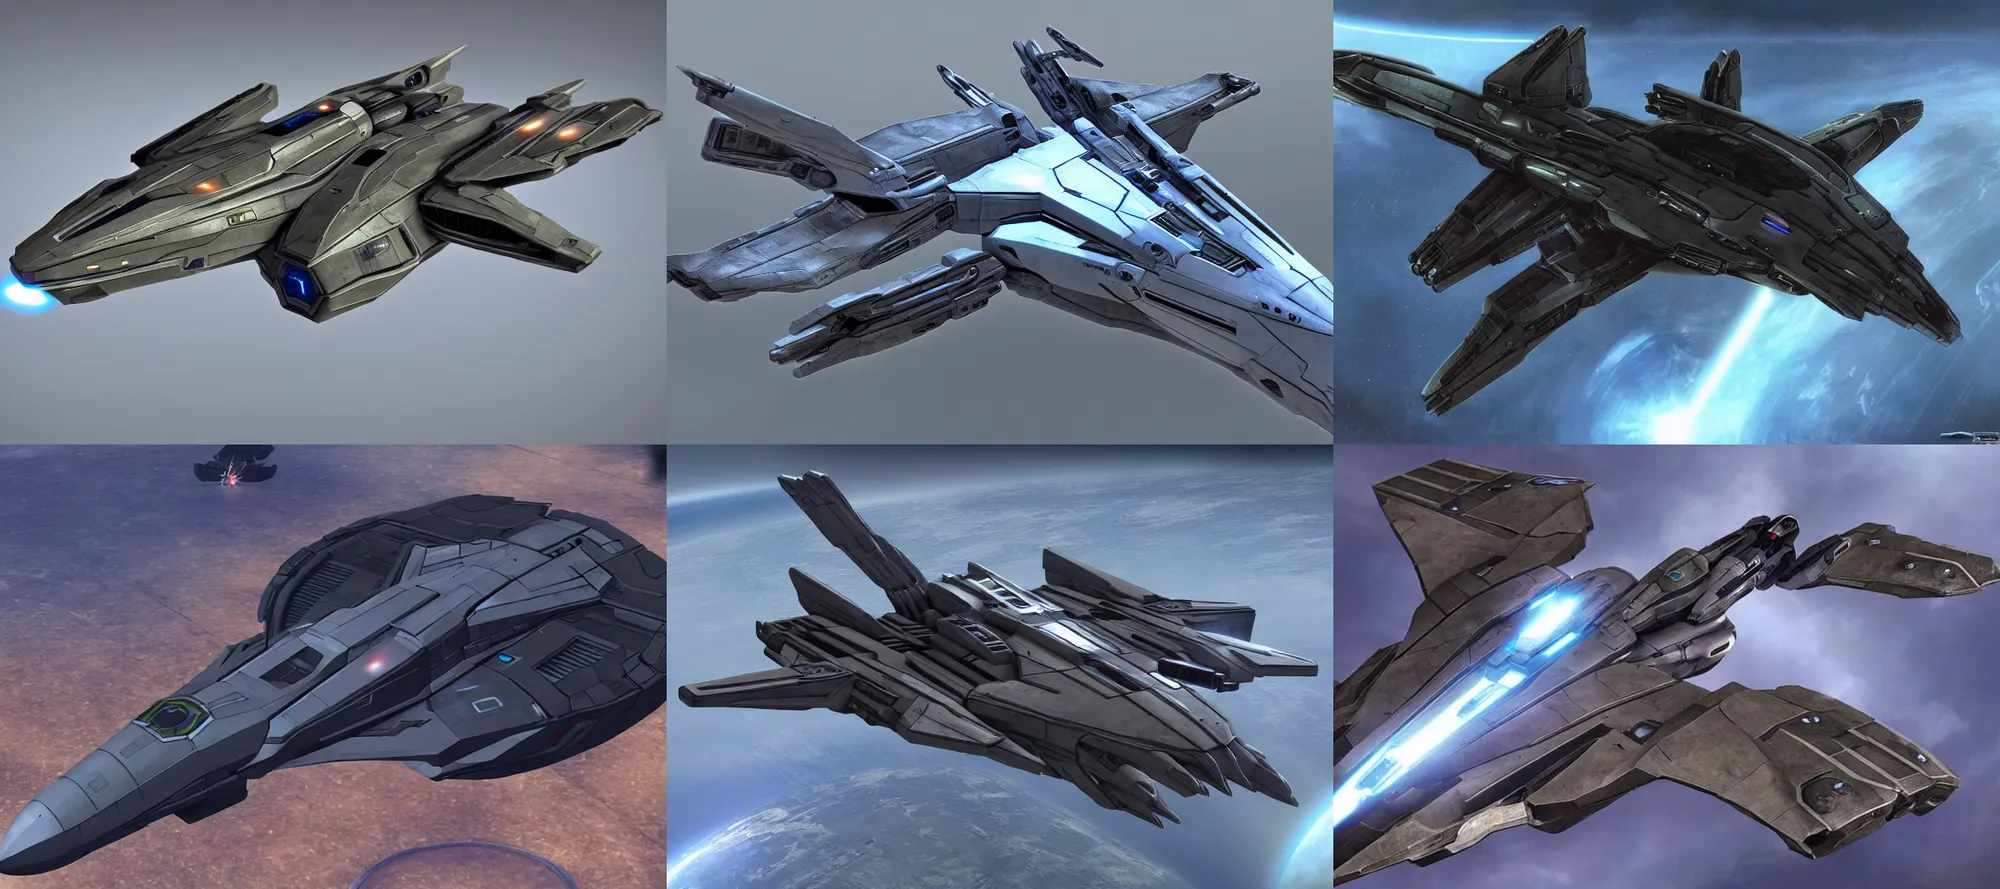 Prompt: a futuristic halo mass effect star wars fighter jet